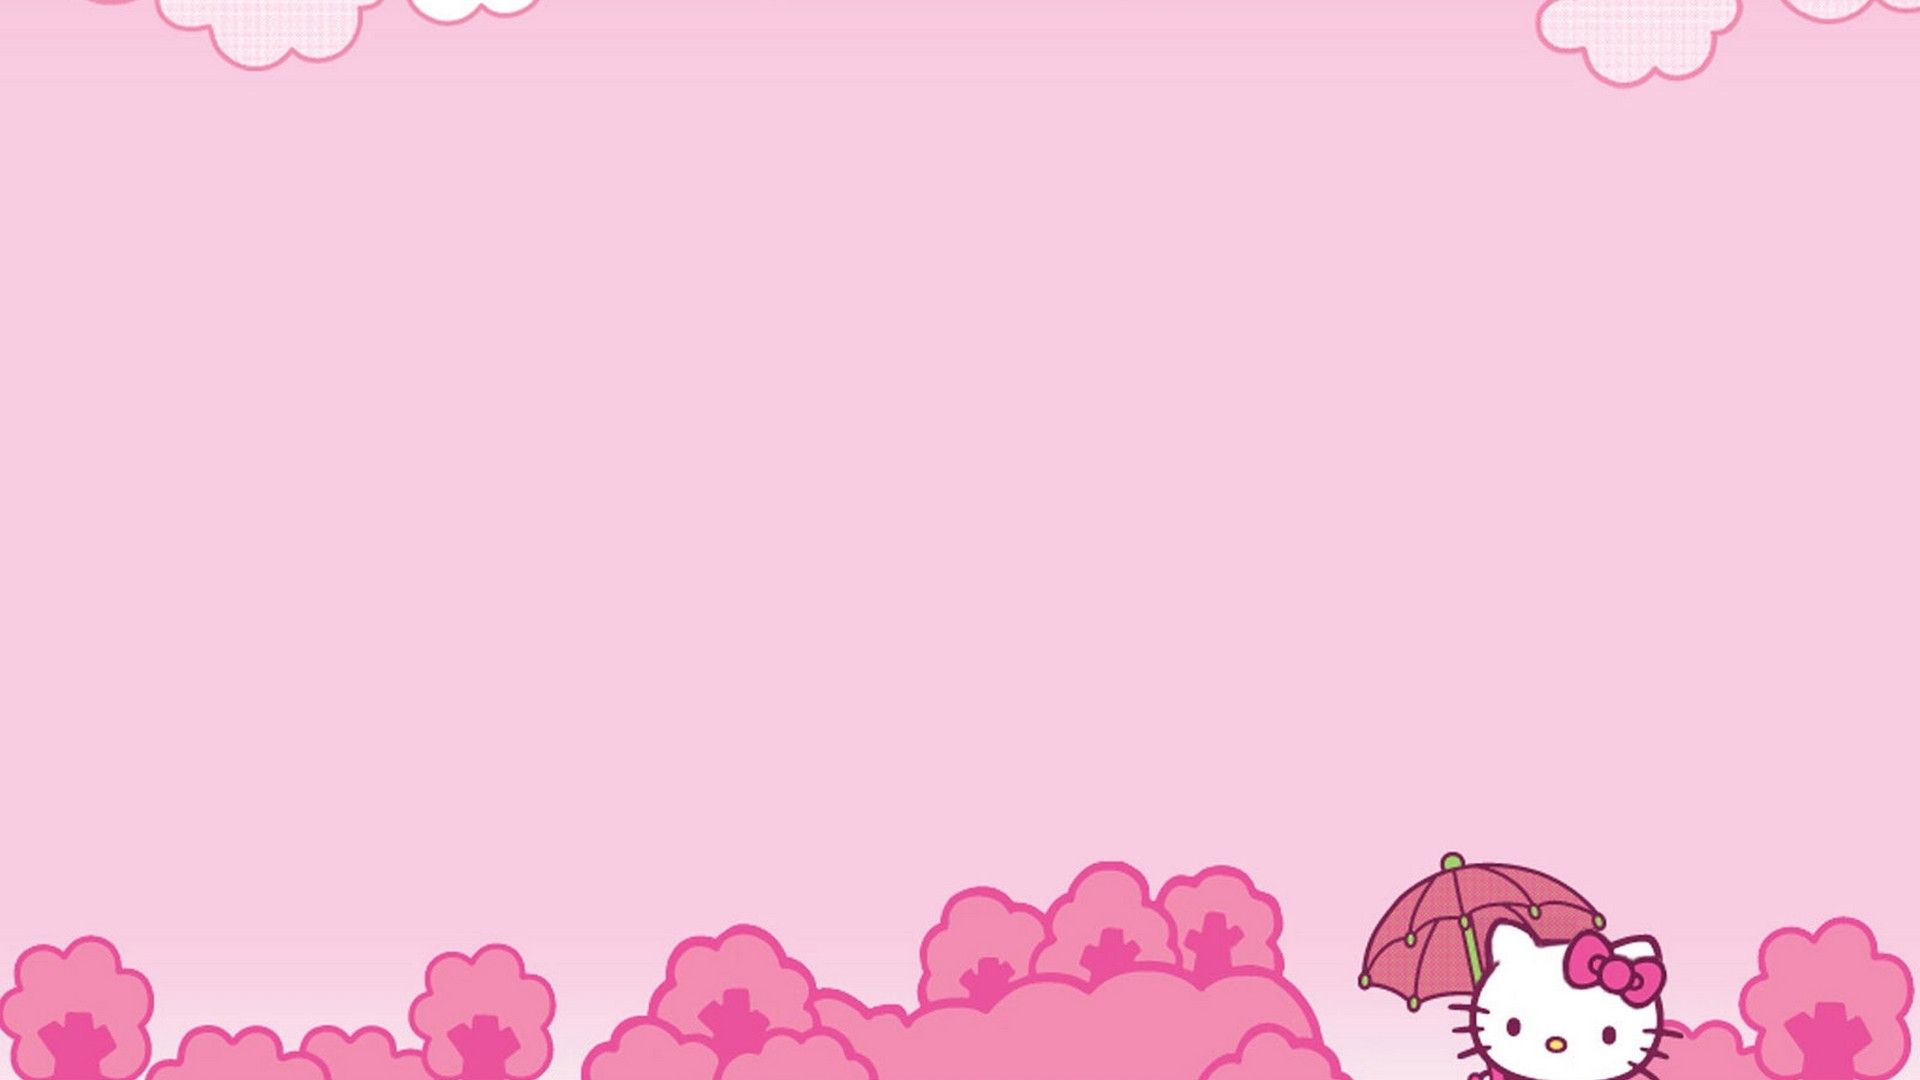 Hello Kitty Logo Wallpapers on WallpaperDog